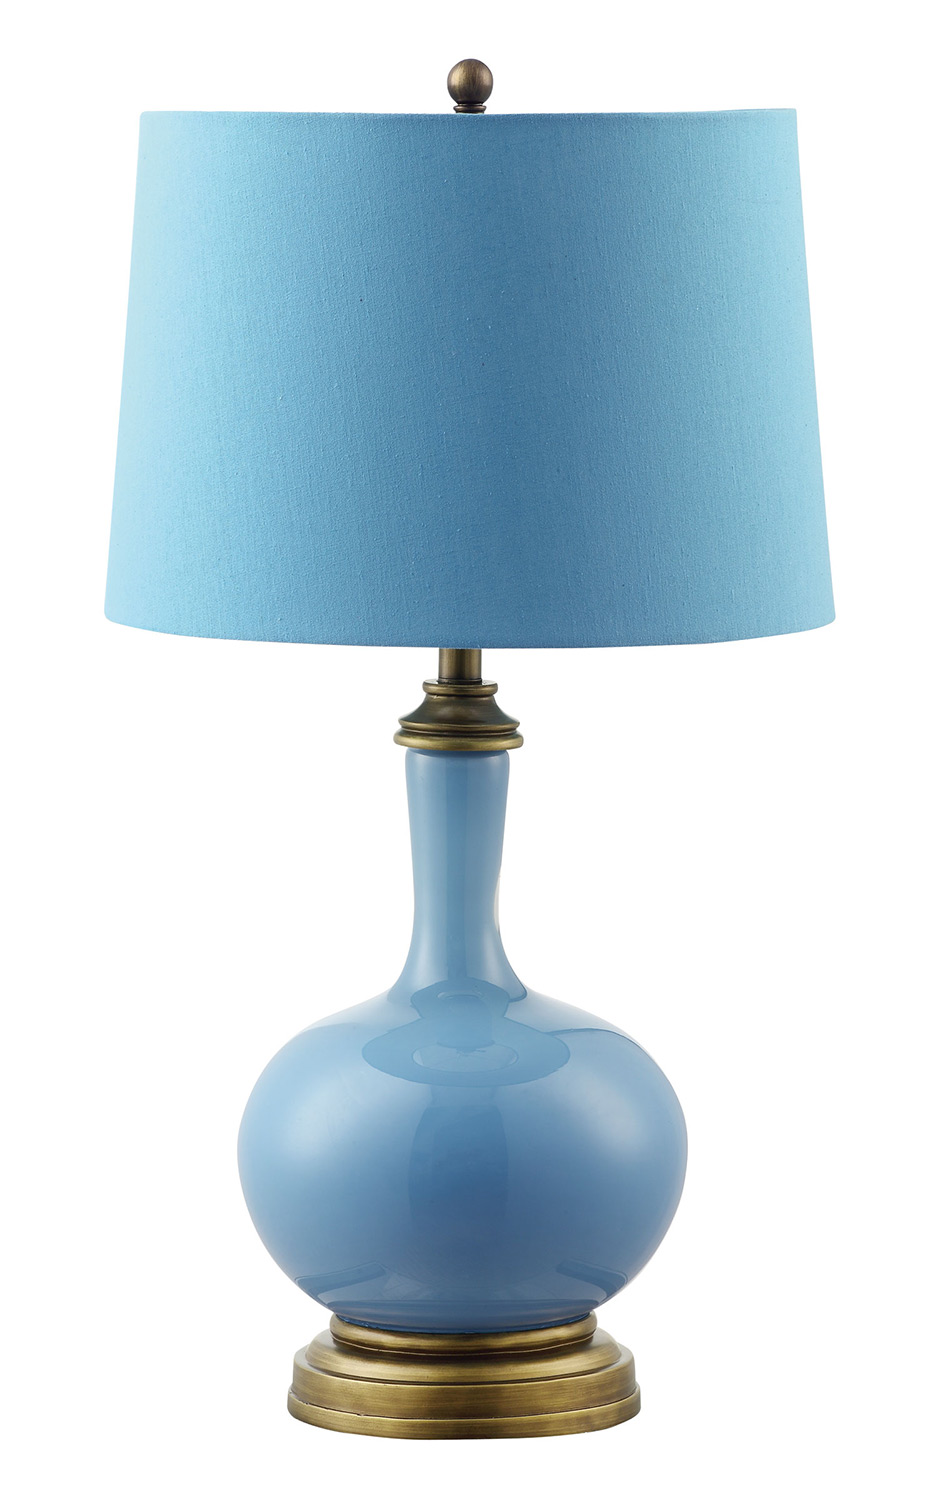 Coaster 901511 Table Lamp - Sky Blue